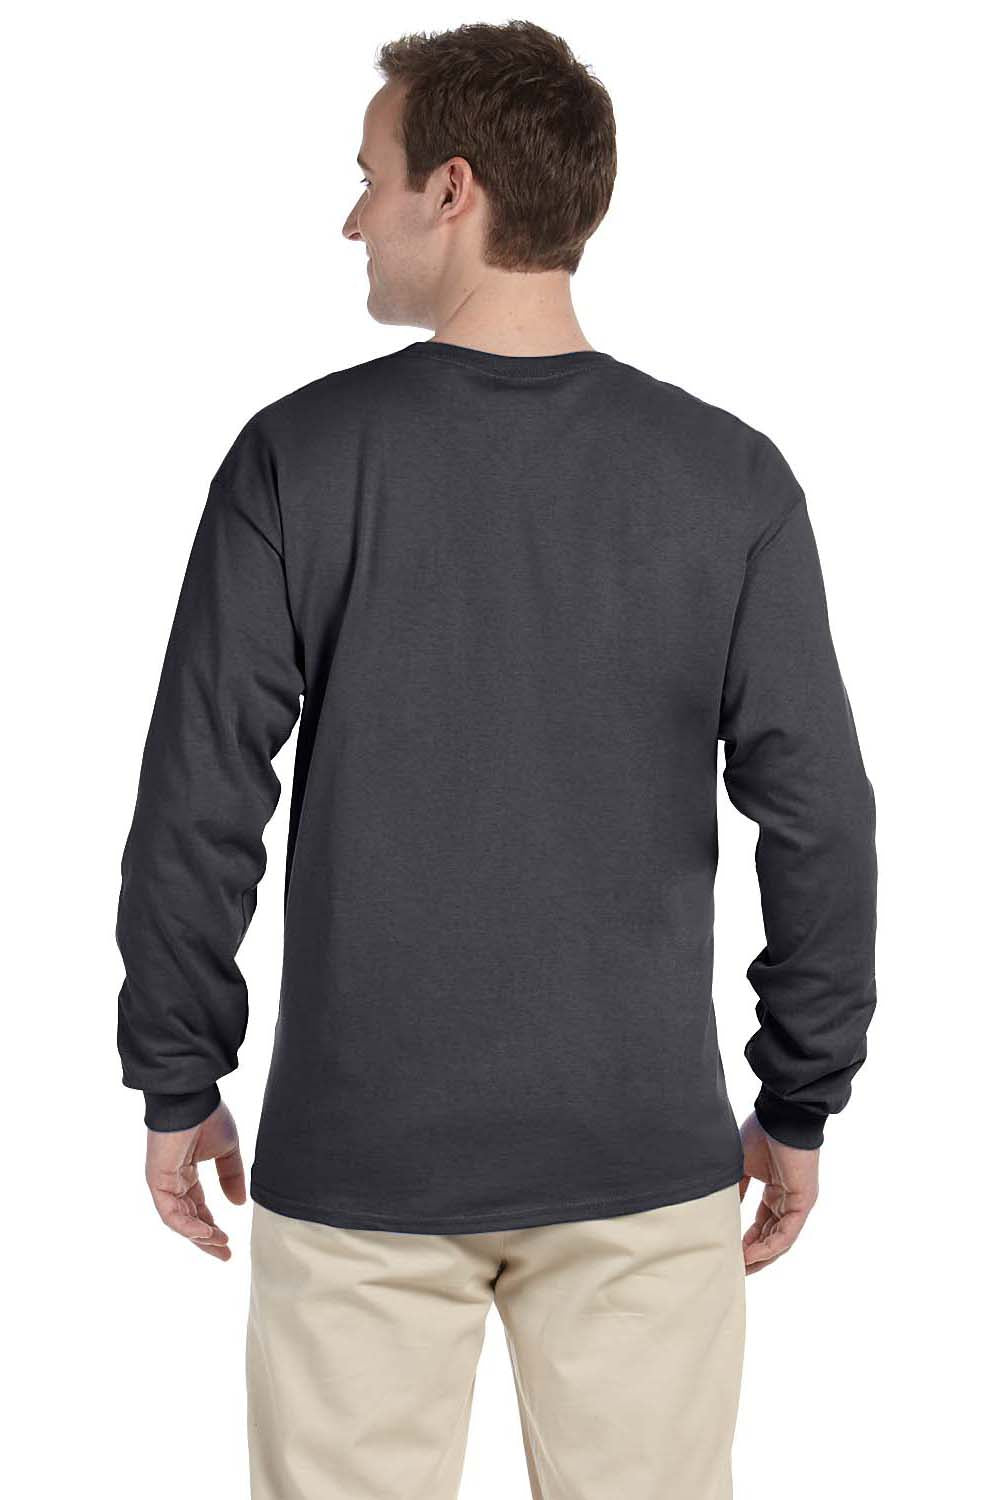 Gildan G240 Mens Ultra Long Sleeve Crewneck T-Shirt Charcoal Grey Back